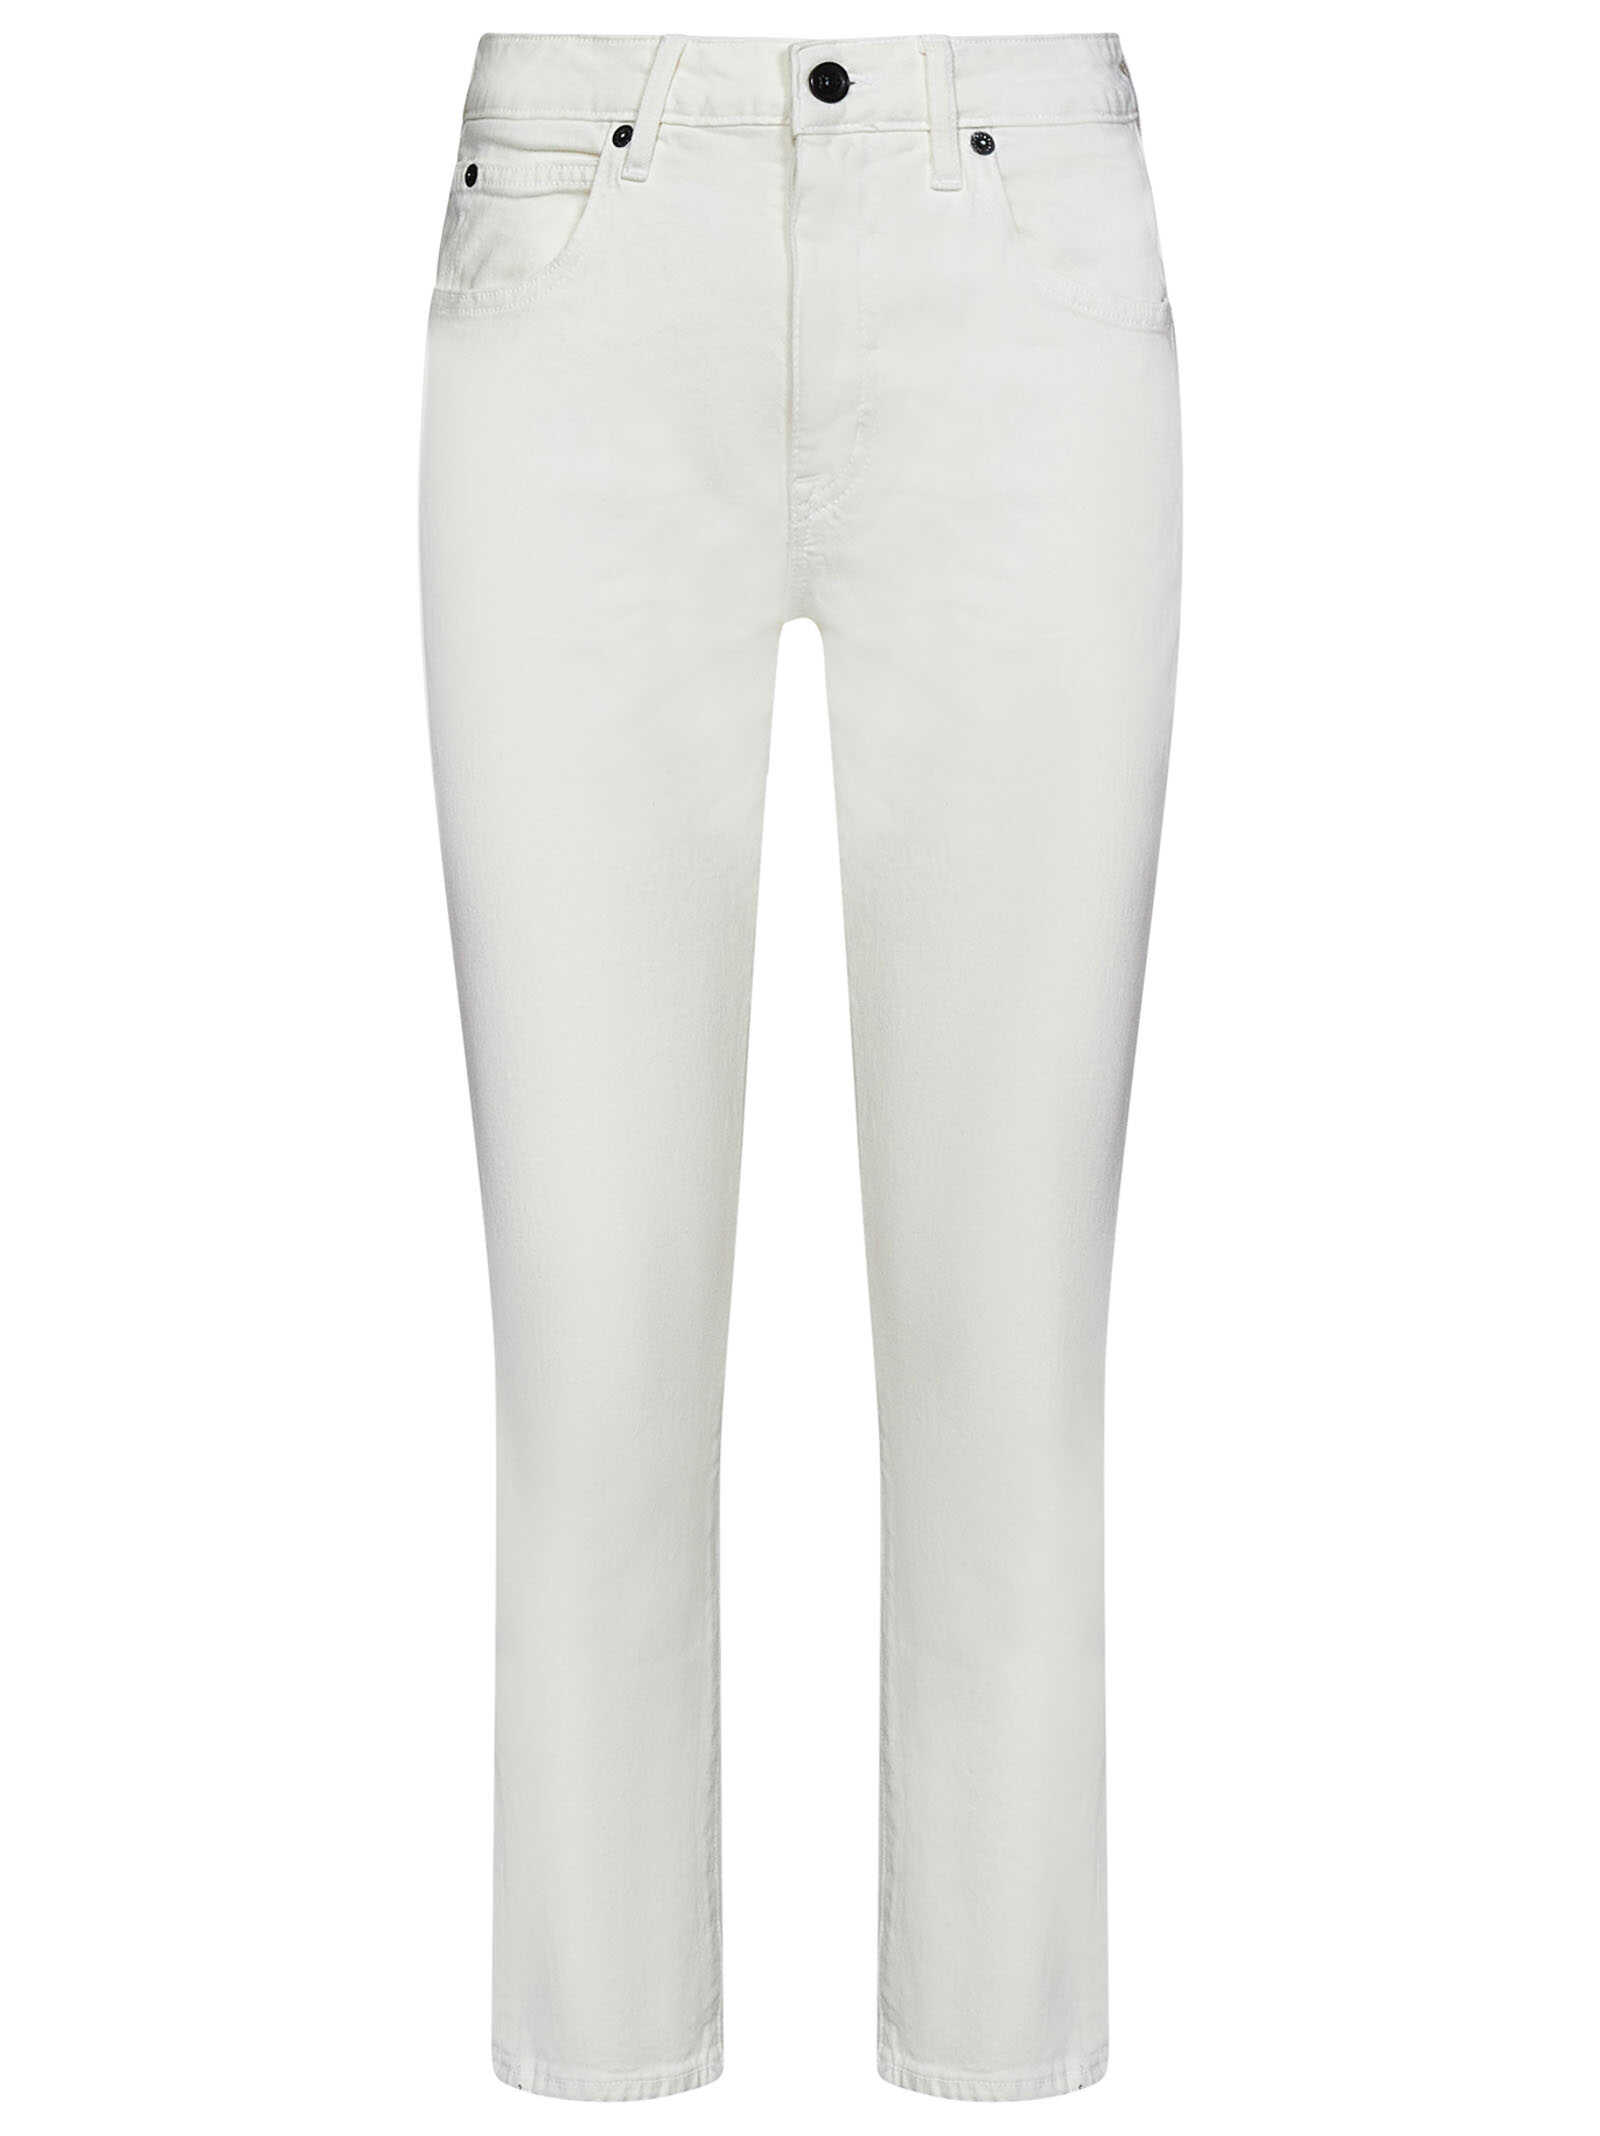 Poze SLVRLAKE Jeans White White b-mall.ro 